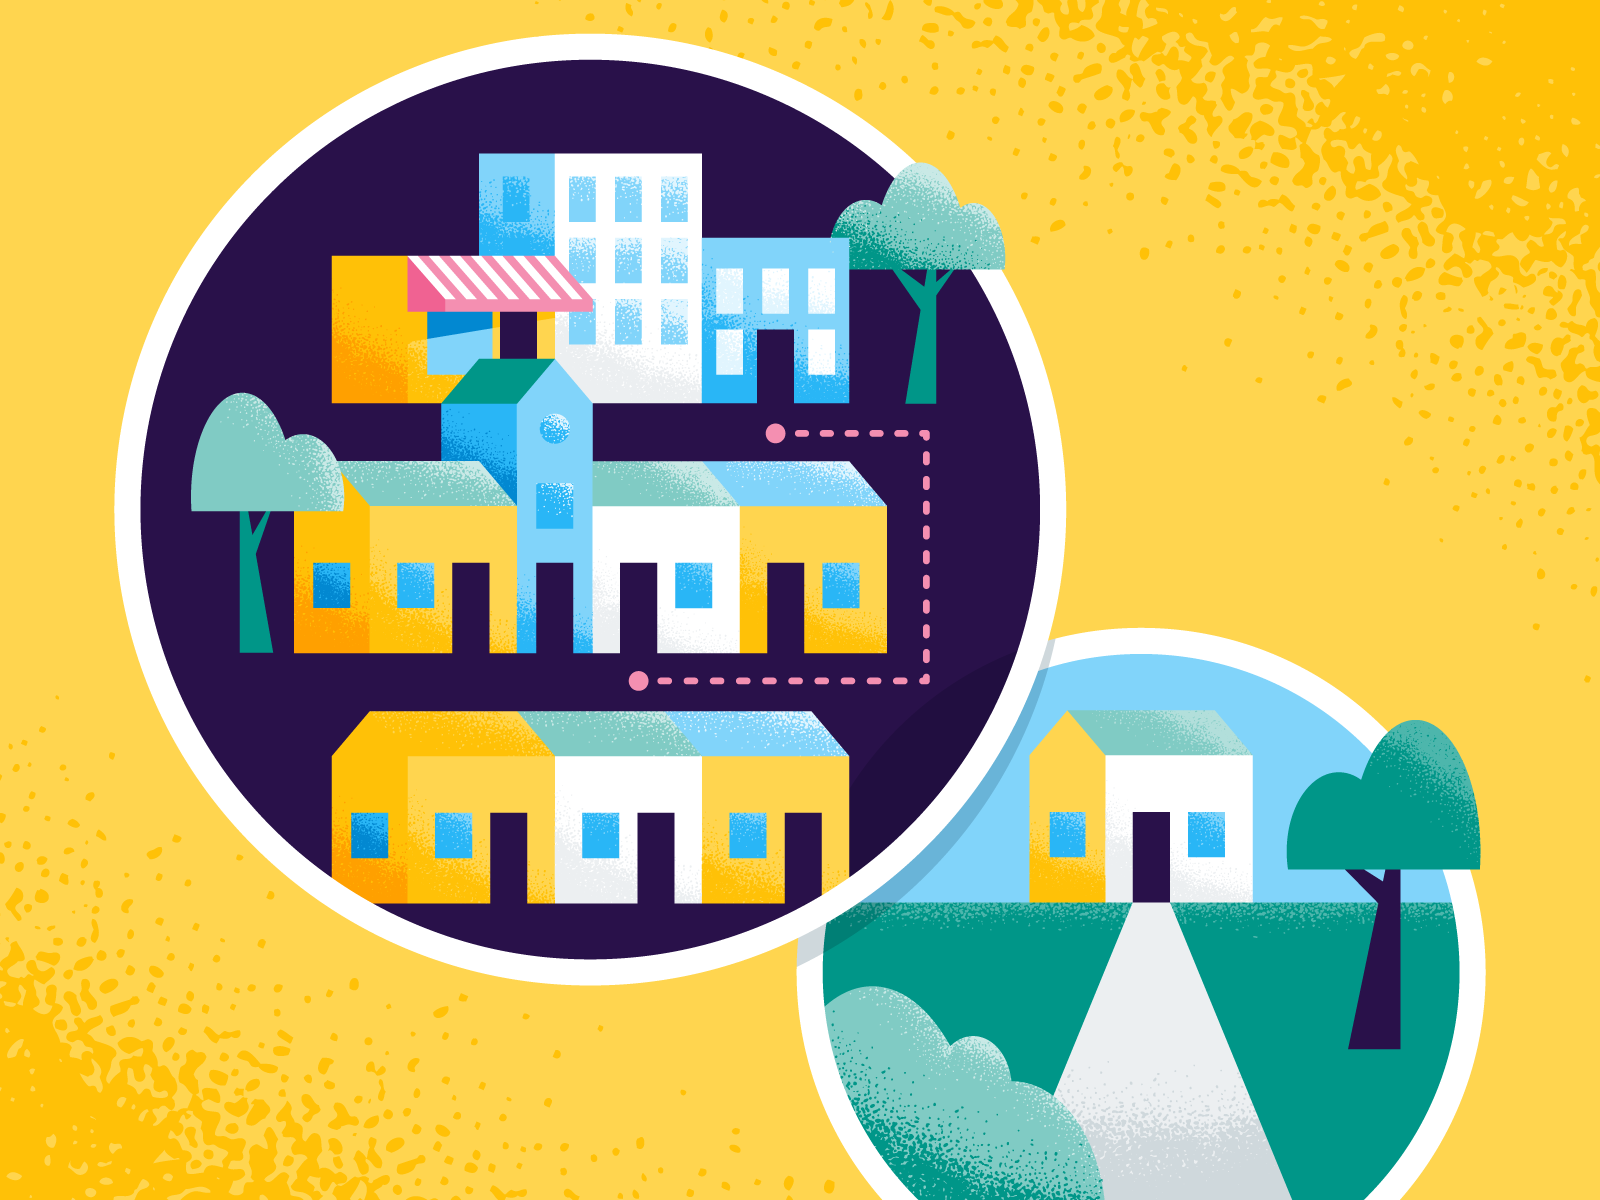 Short Commute vs Big Yard city homes house illustration infographic real estate